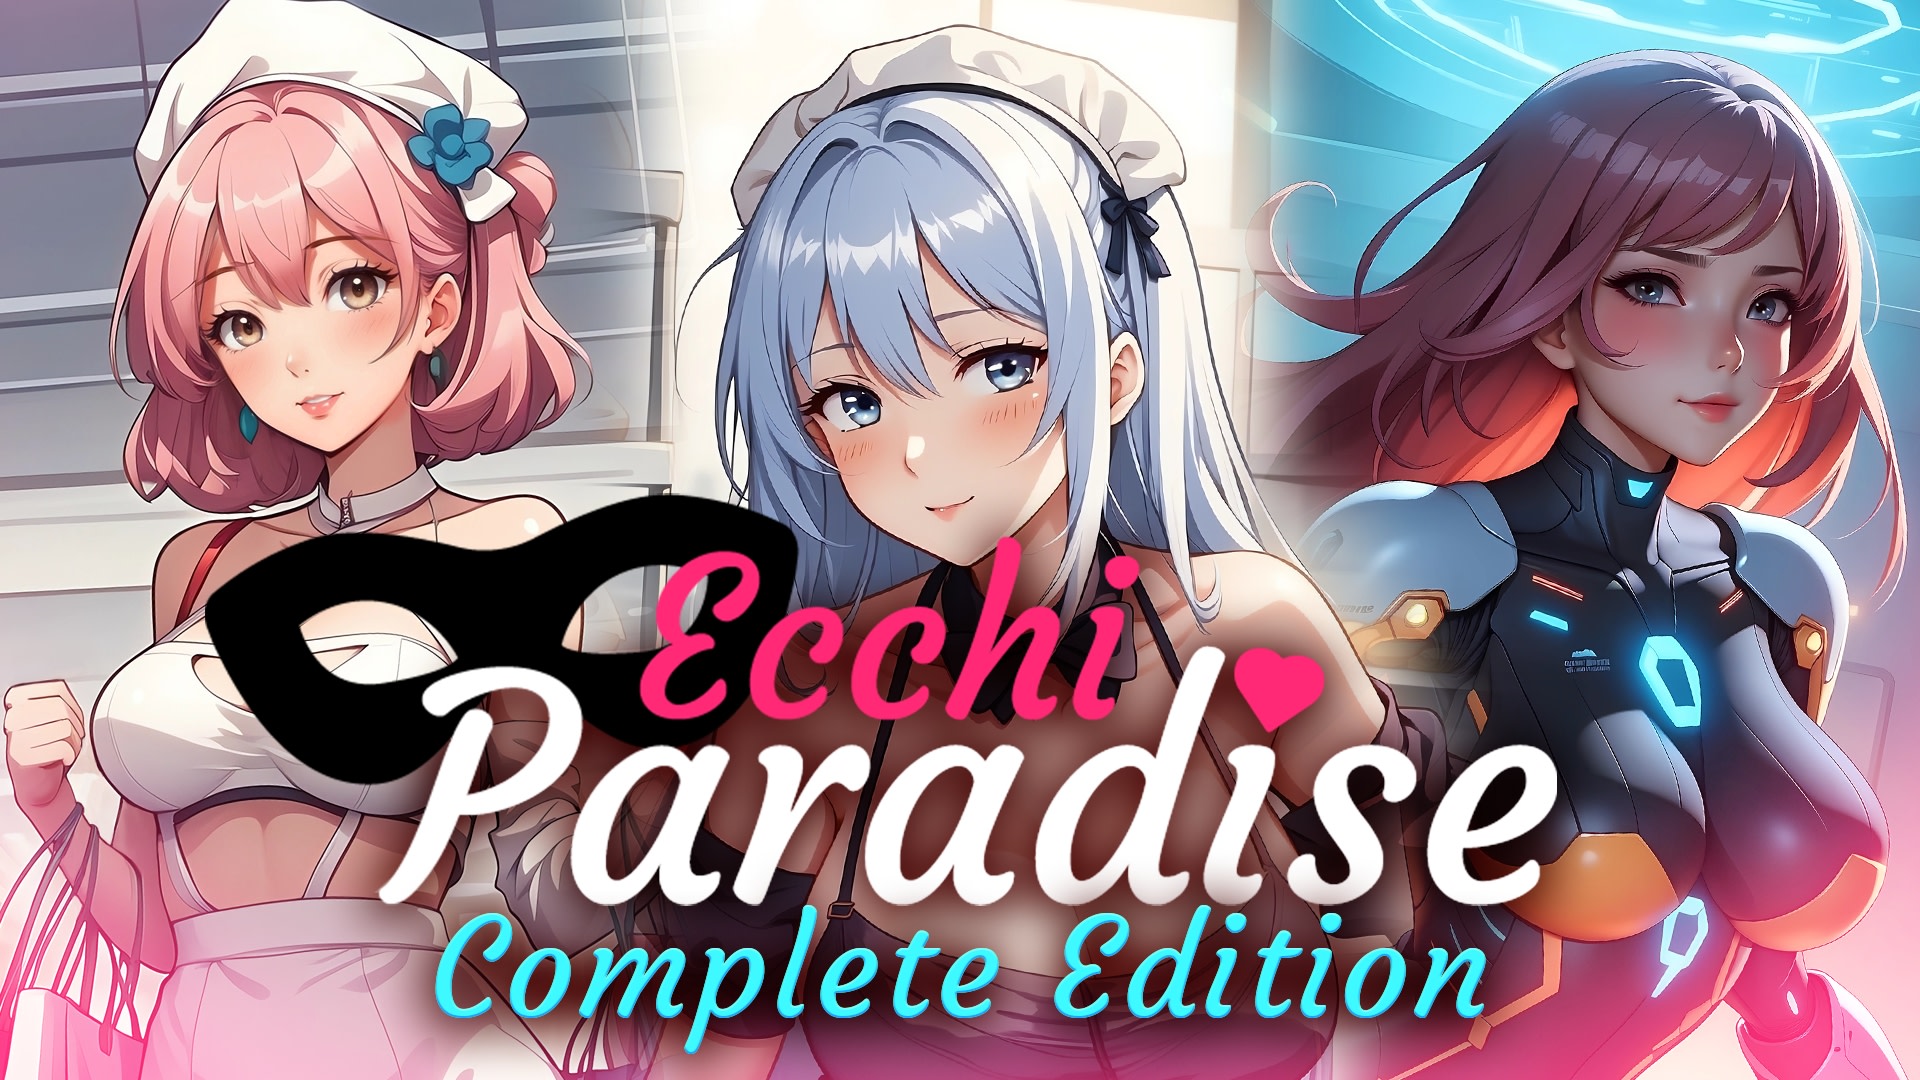 Ecchi Paradise: Complete Edition